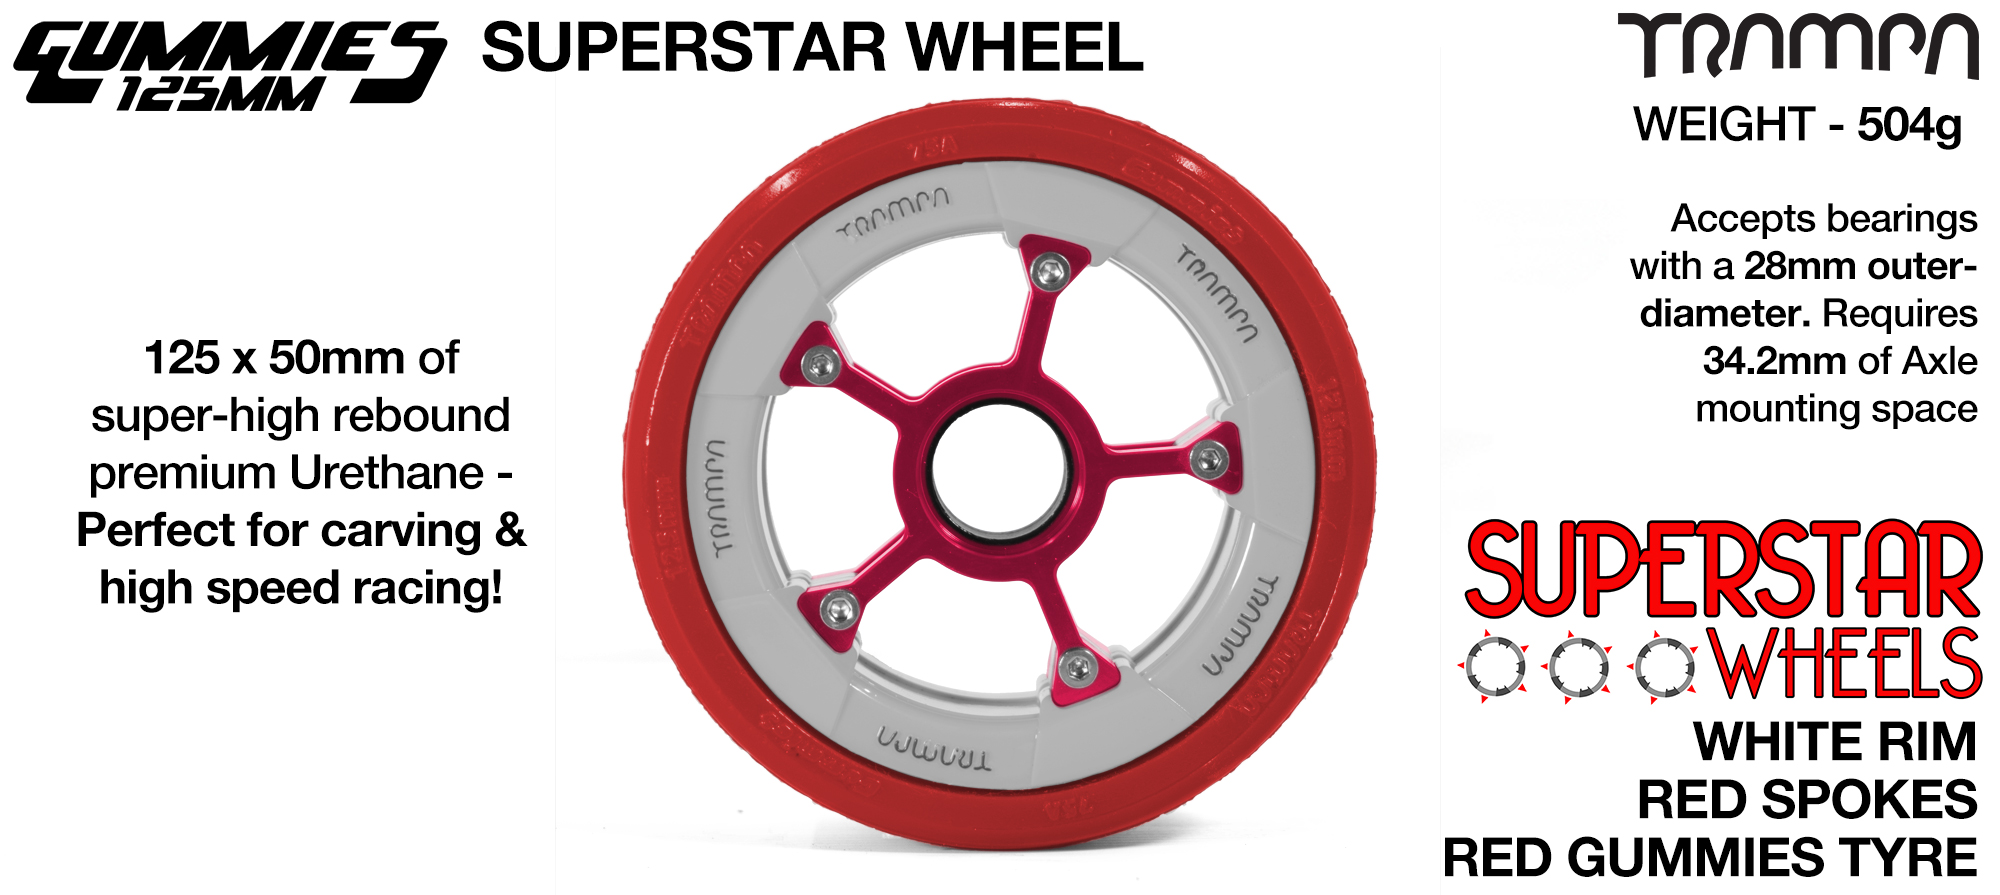 Superstar 125mm Longboard Wheels - WHITE print Superstar Rim with RED Spokes & RED Gummies 